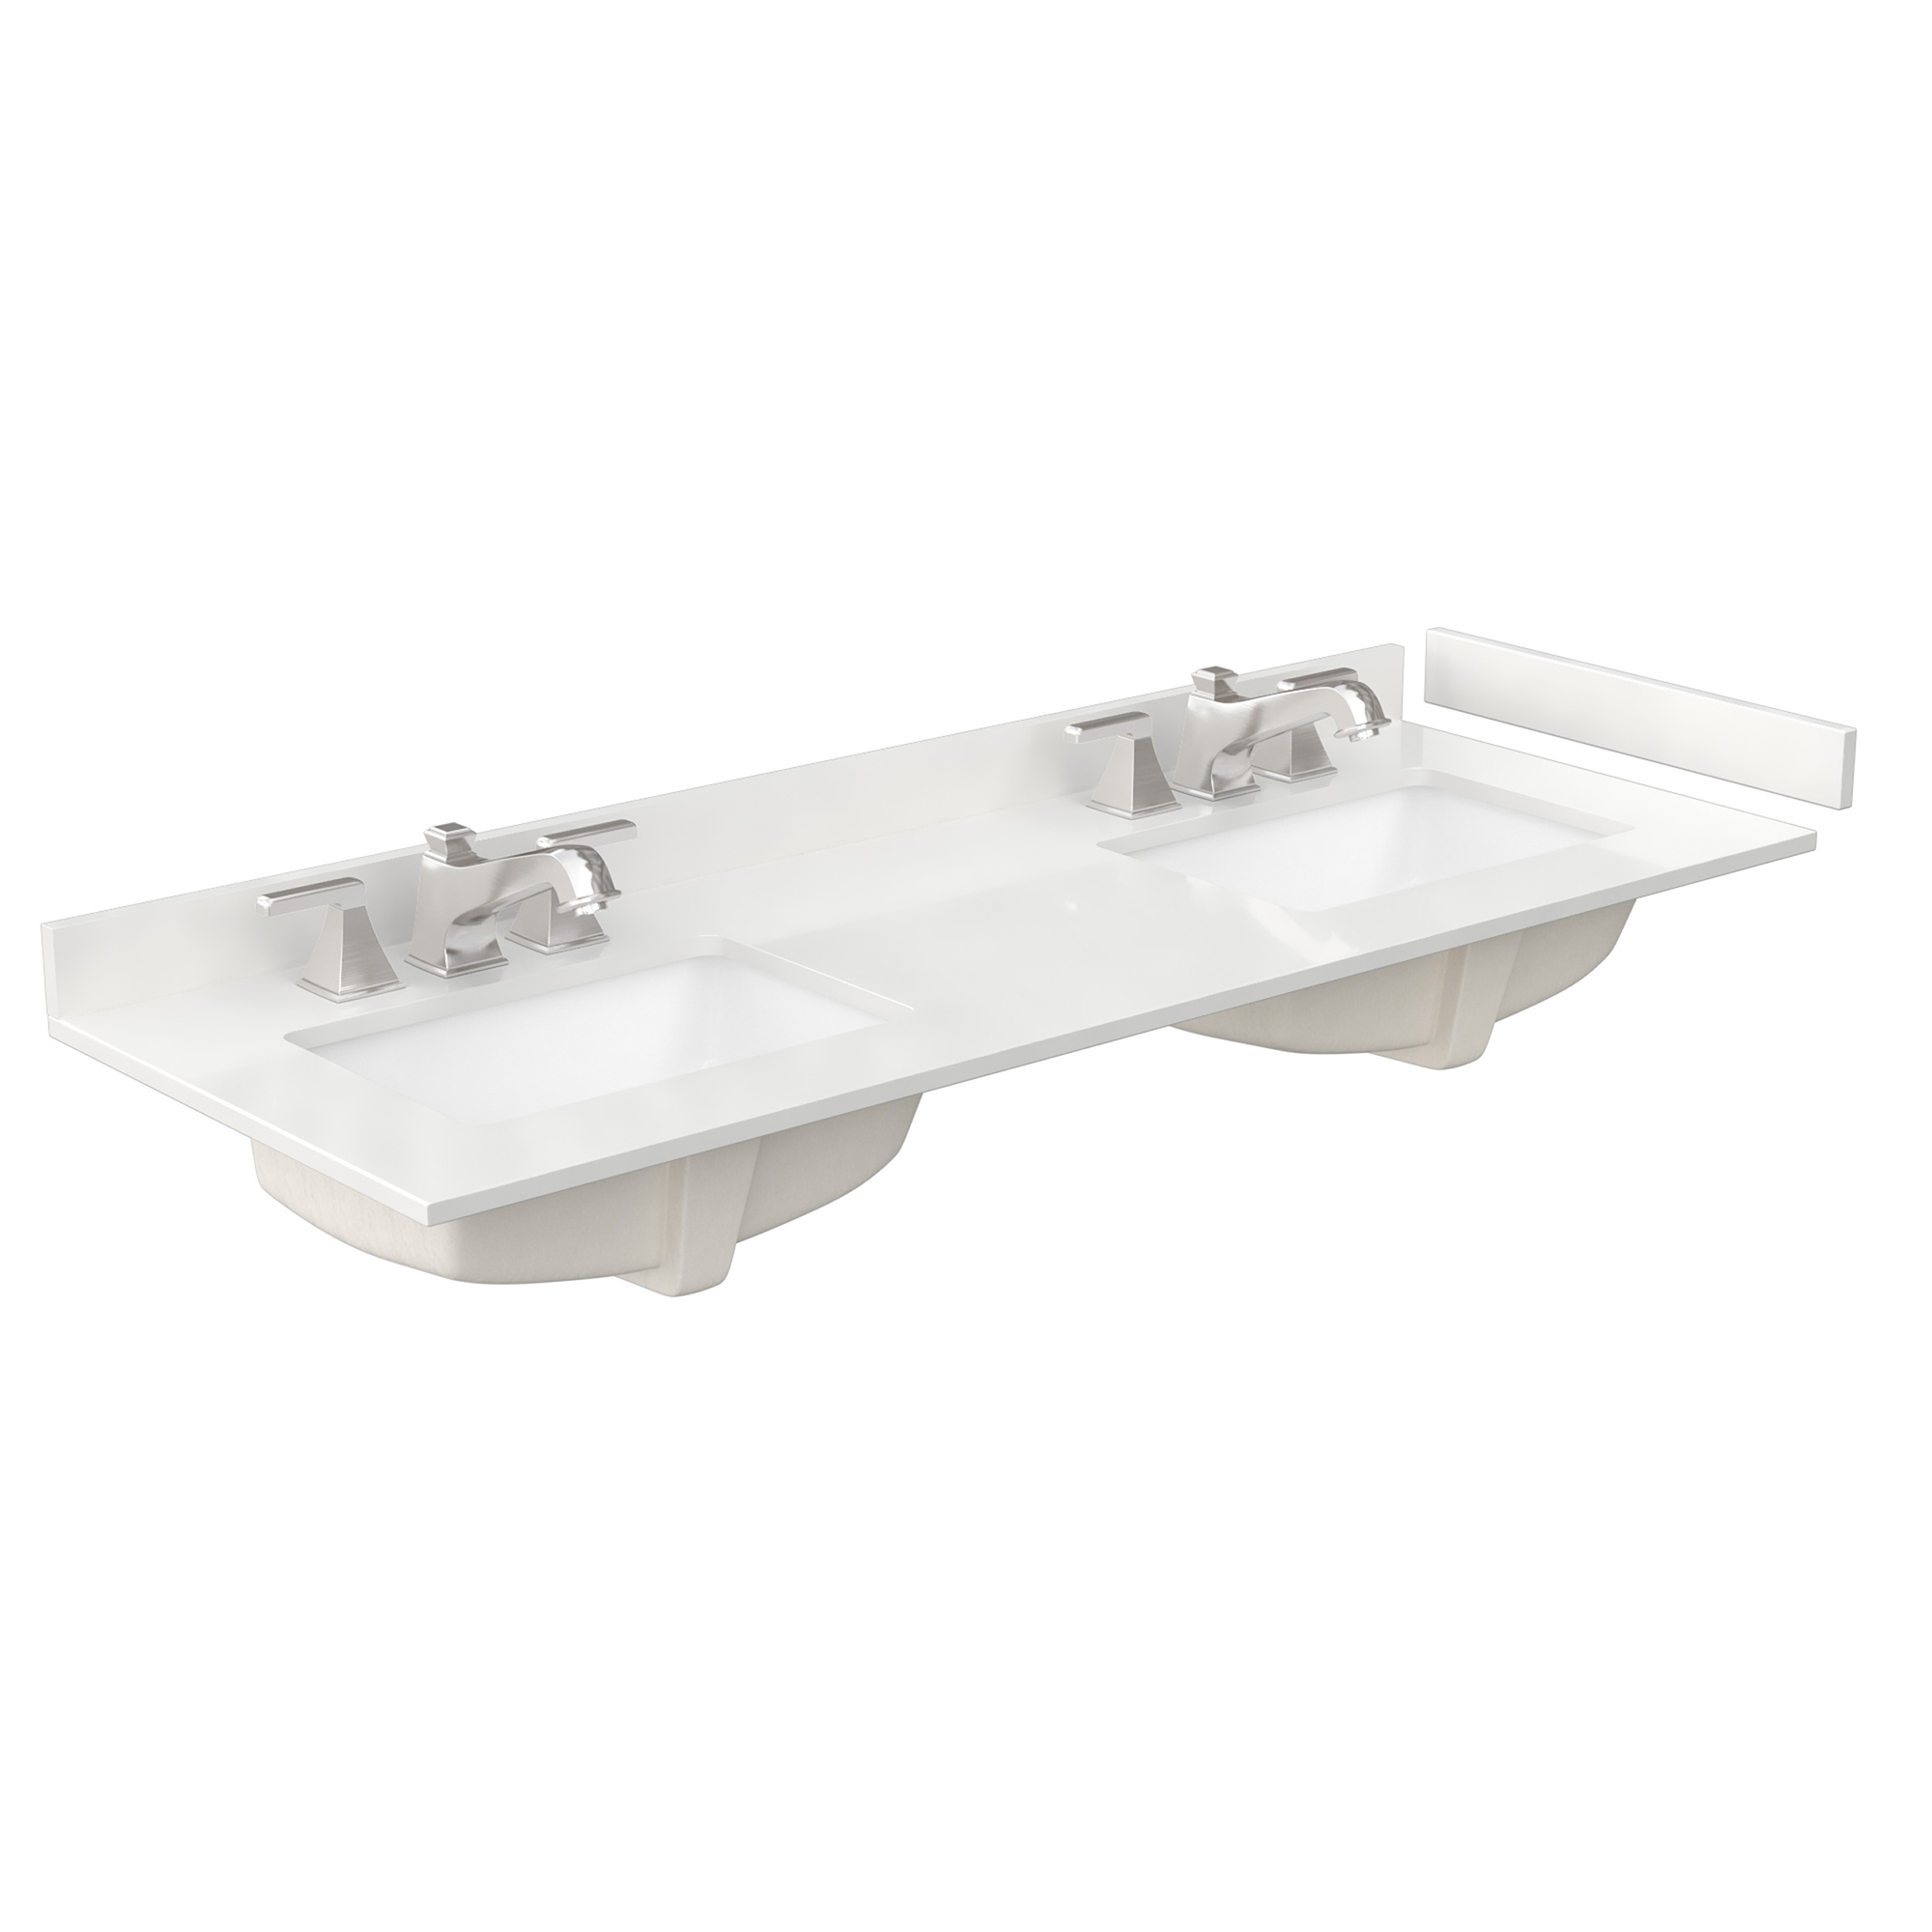 60" Double Countertop - White Quartz (1000) with Undermount Square Sinks (3-Hole) - Includes Backsplash and Sidesplash WCFQC360DTOPUNSWQ